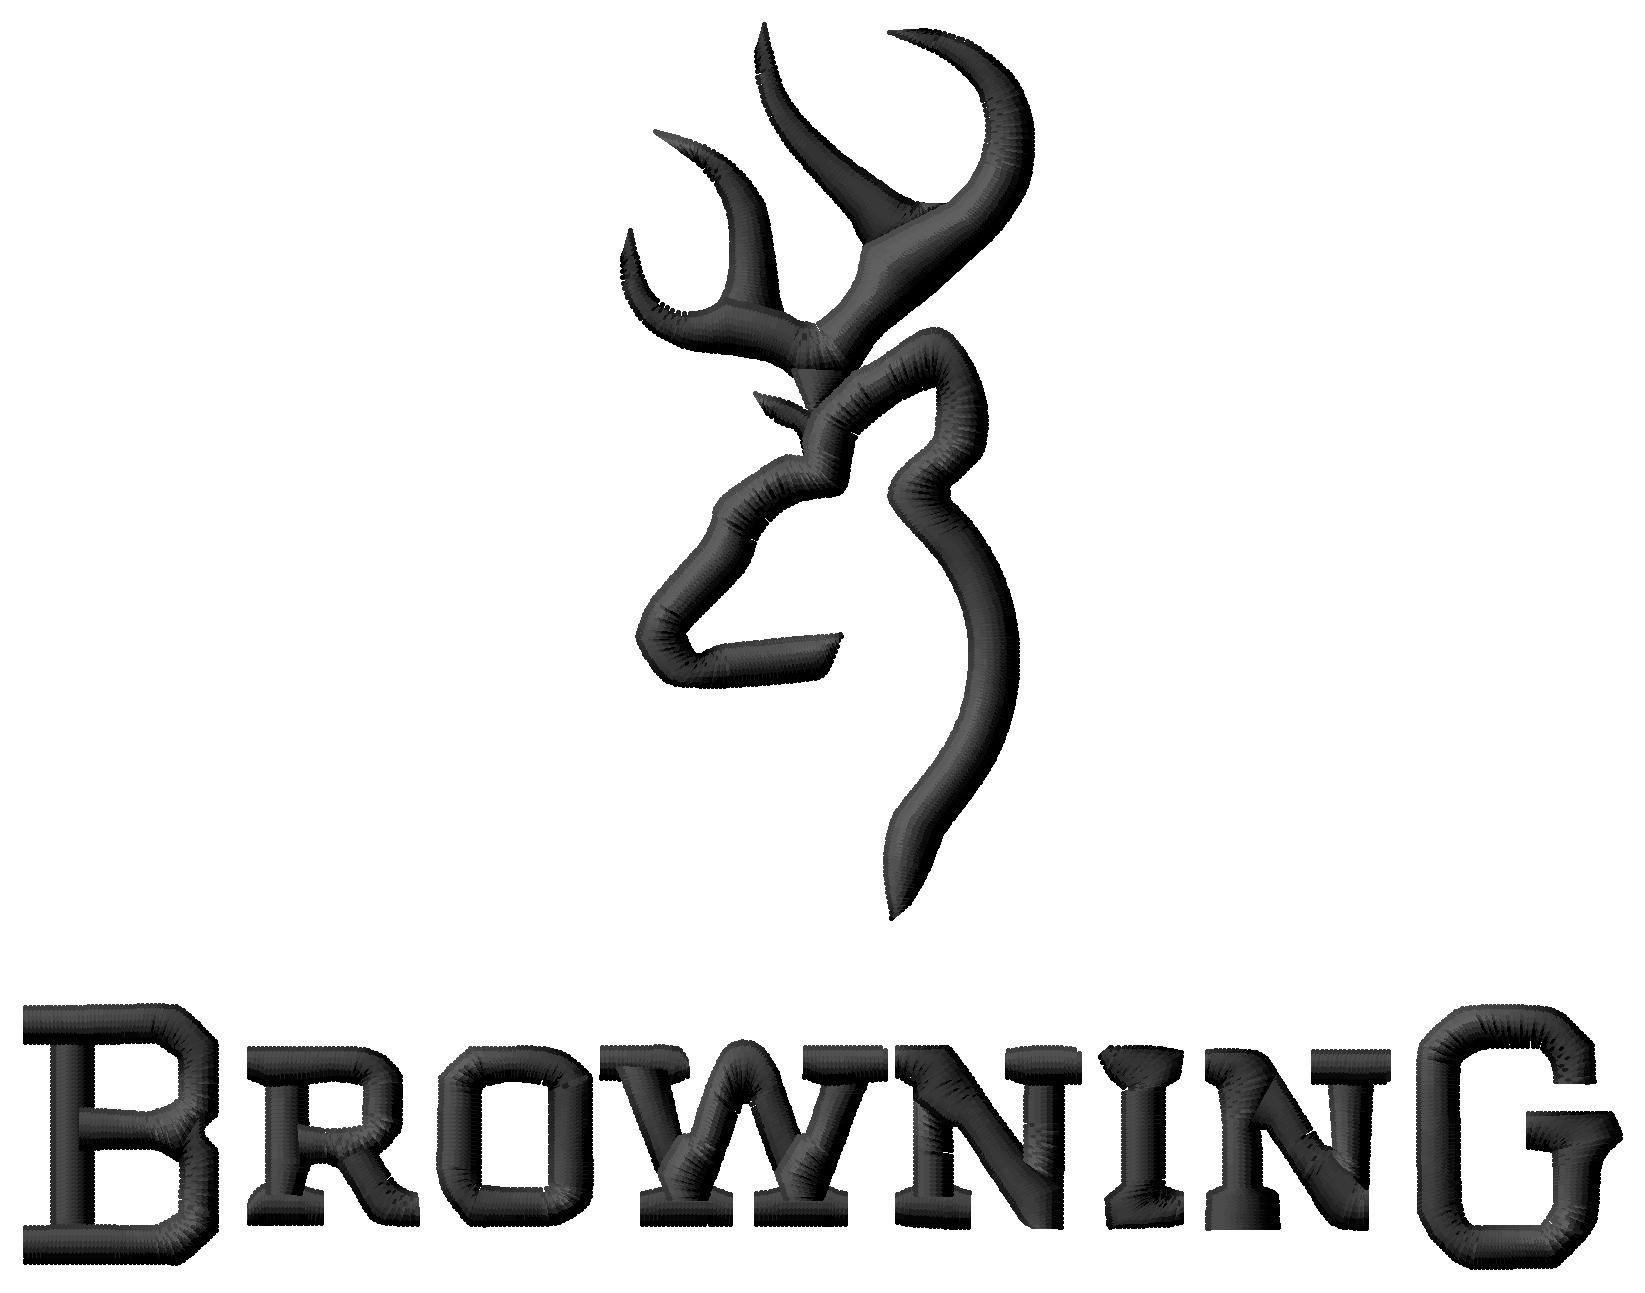 Browning Deer Logo - Free Browning Deer Logo Picture, Download Free Clip Art, Free Clip